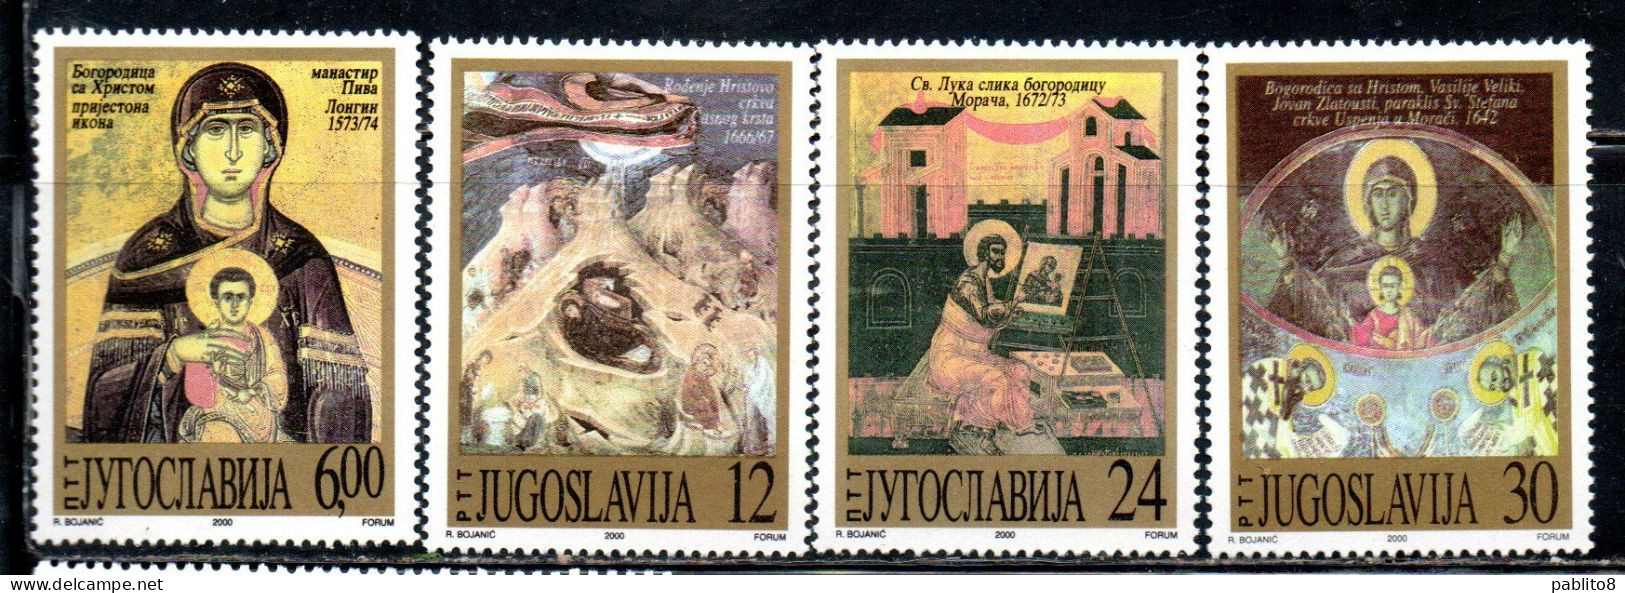 JUGOSLAVIA YUGOSLAVIA 2000 CHRISTMAS NATALE NOEL WEIHNACHTEN NAVIDAD COMPLETE SET SERIE COMPLETA MNH - Unused Stamps